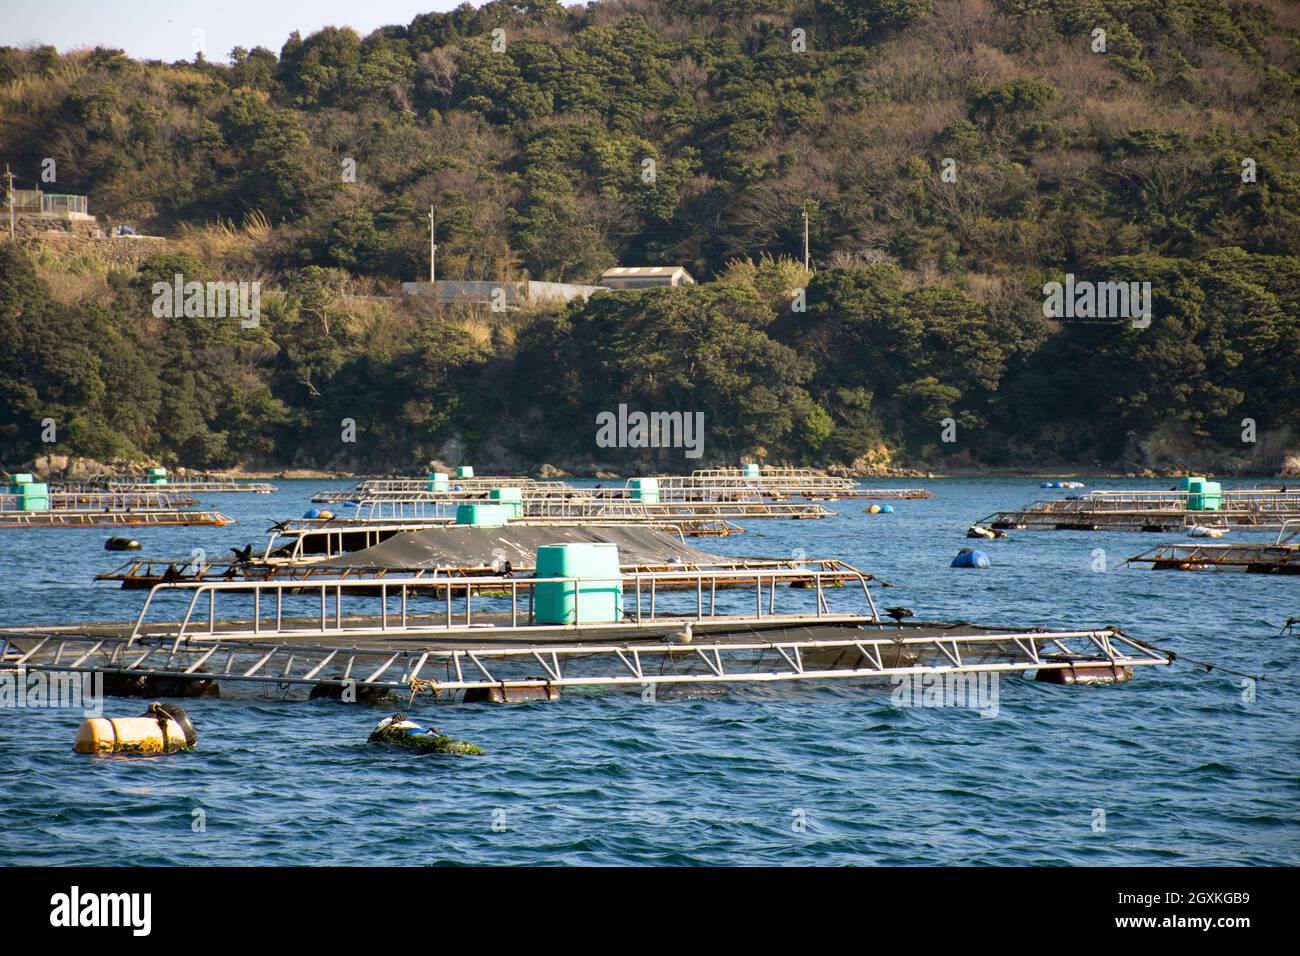 Oyster rafts, Ainan, Japan Stock Photo